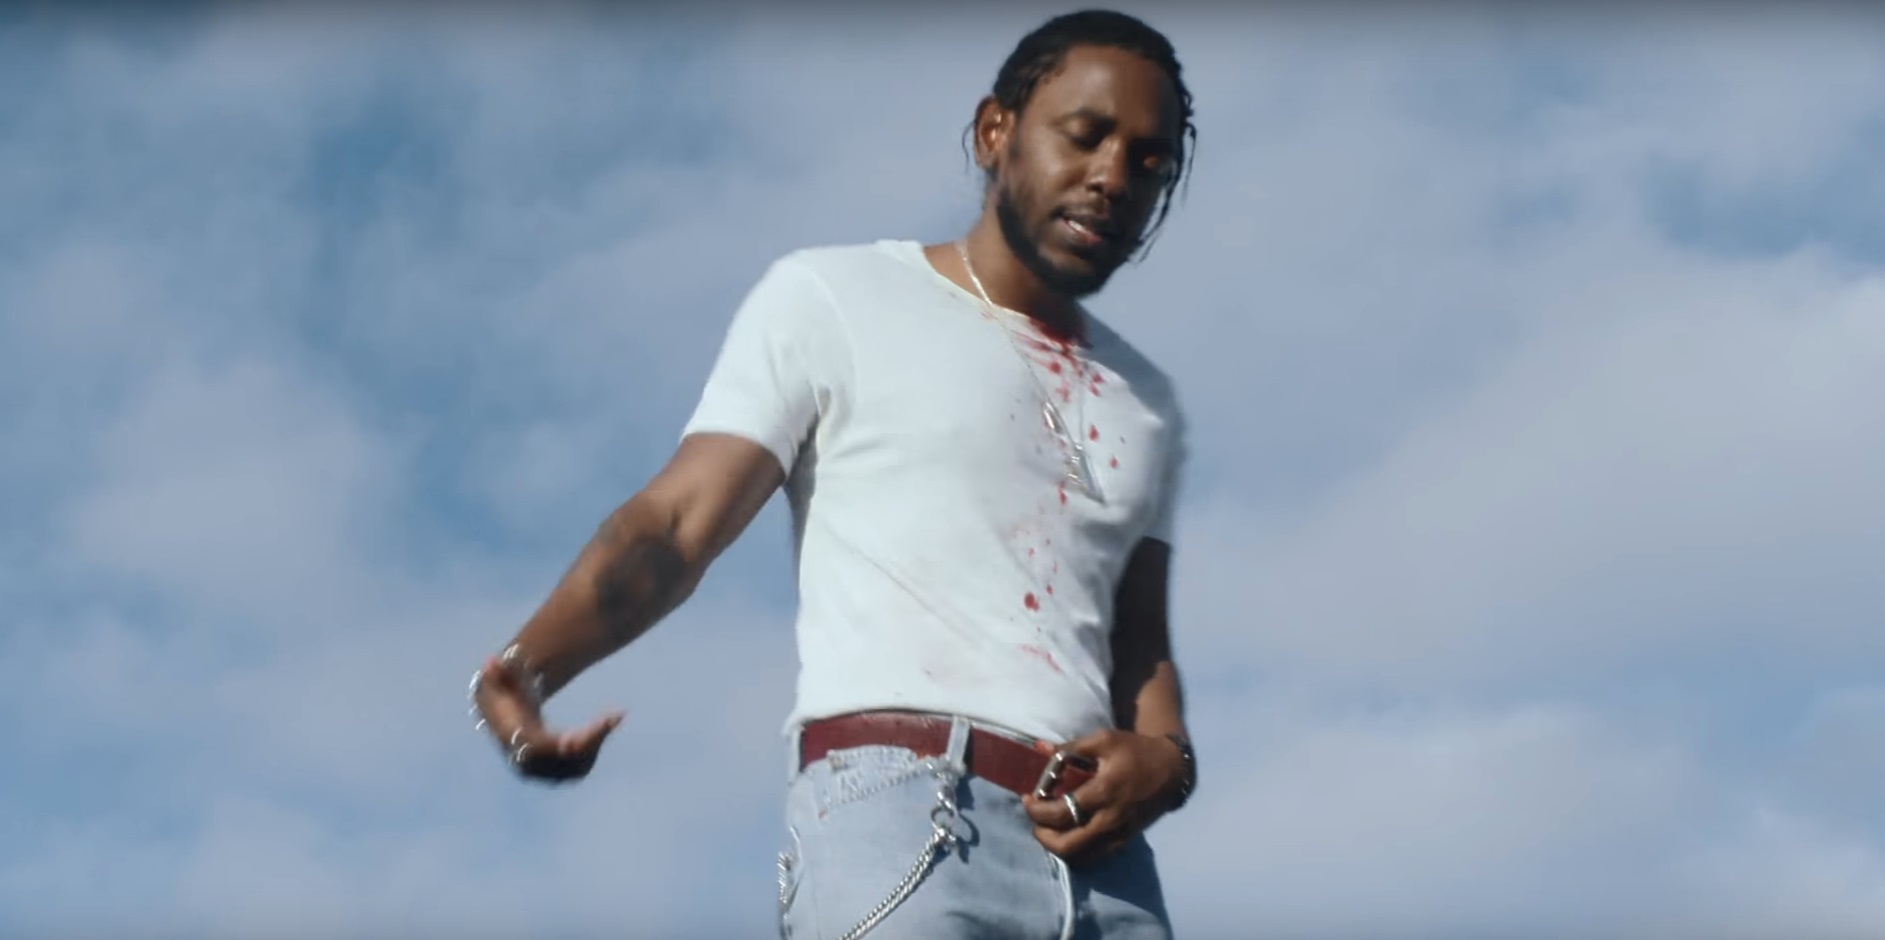 Kendrick Lamar “Element” Video